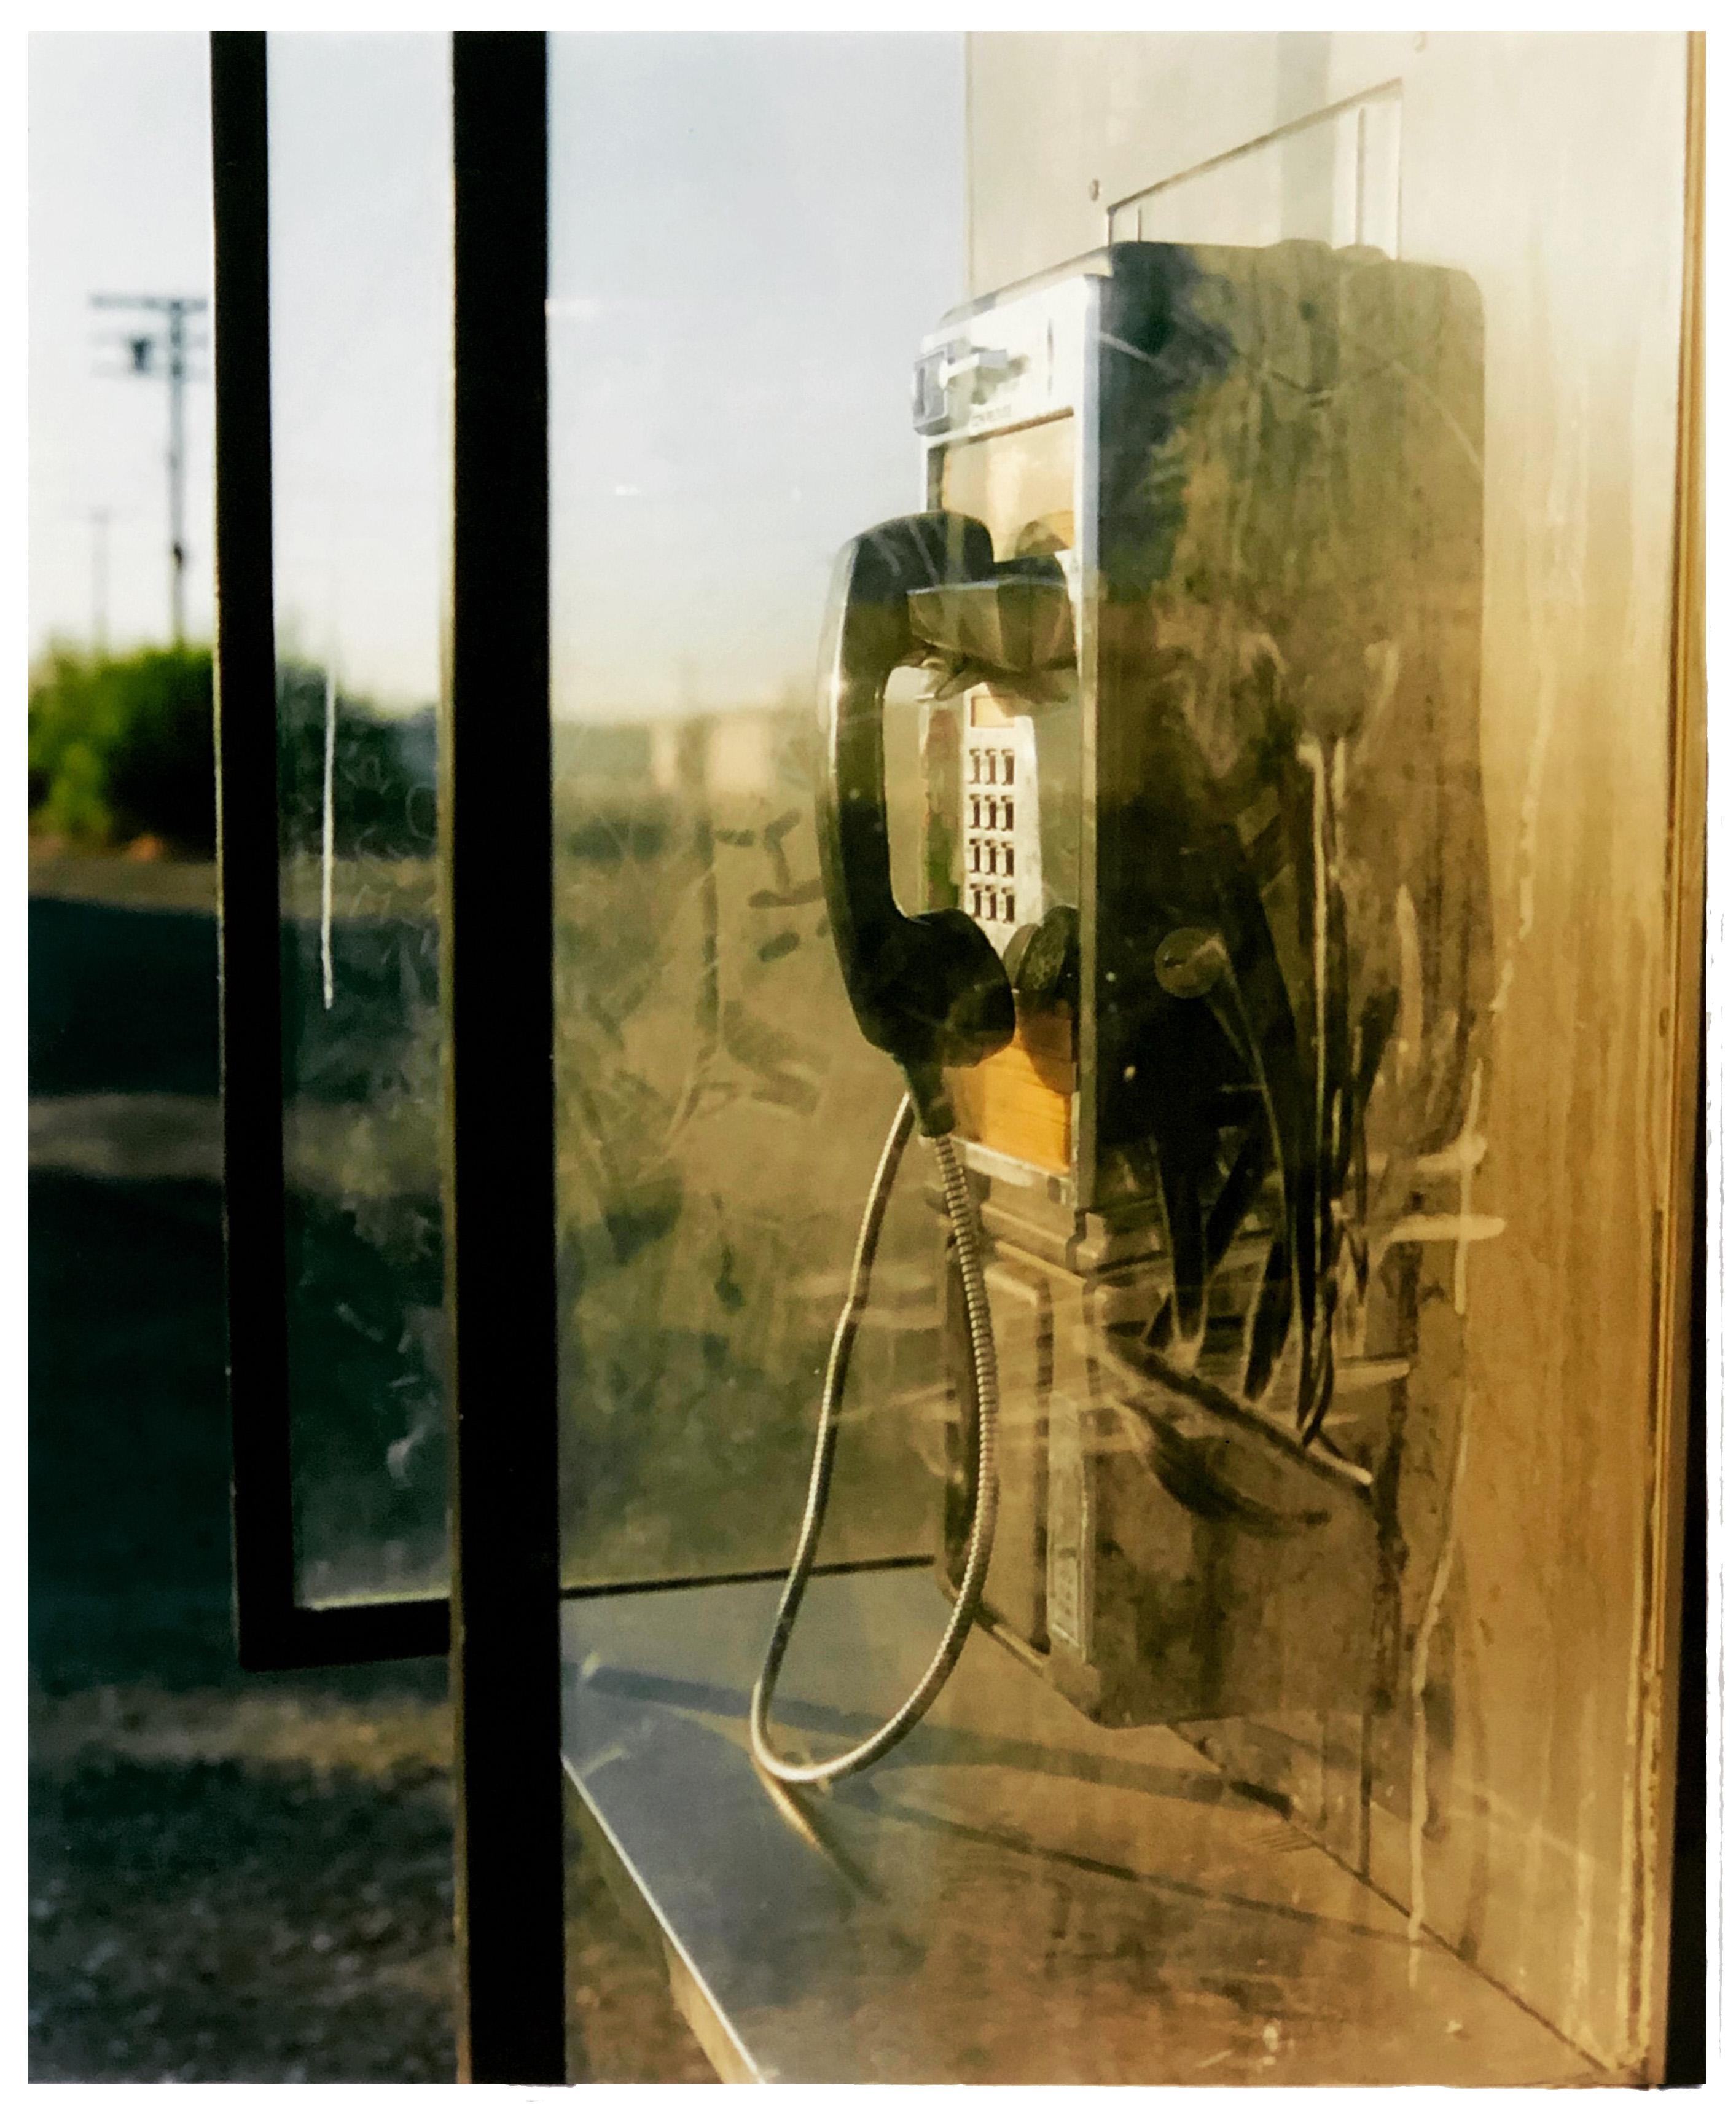 Richard Heeps Print - Call Box, Salton City, California - American Color Photography